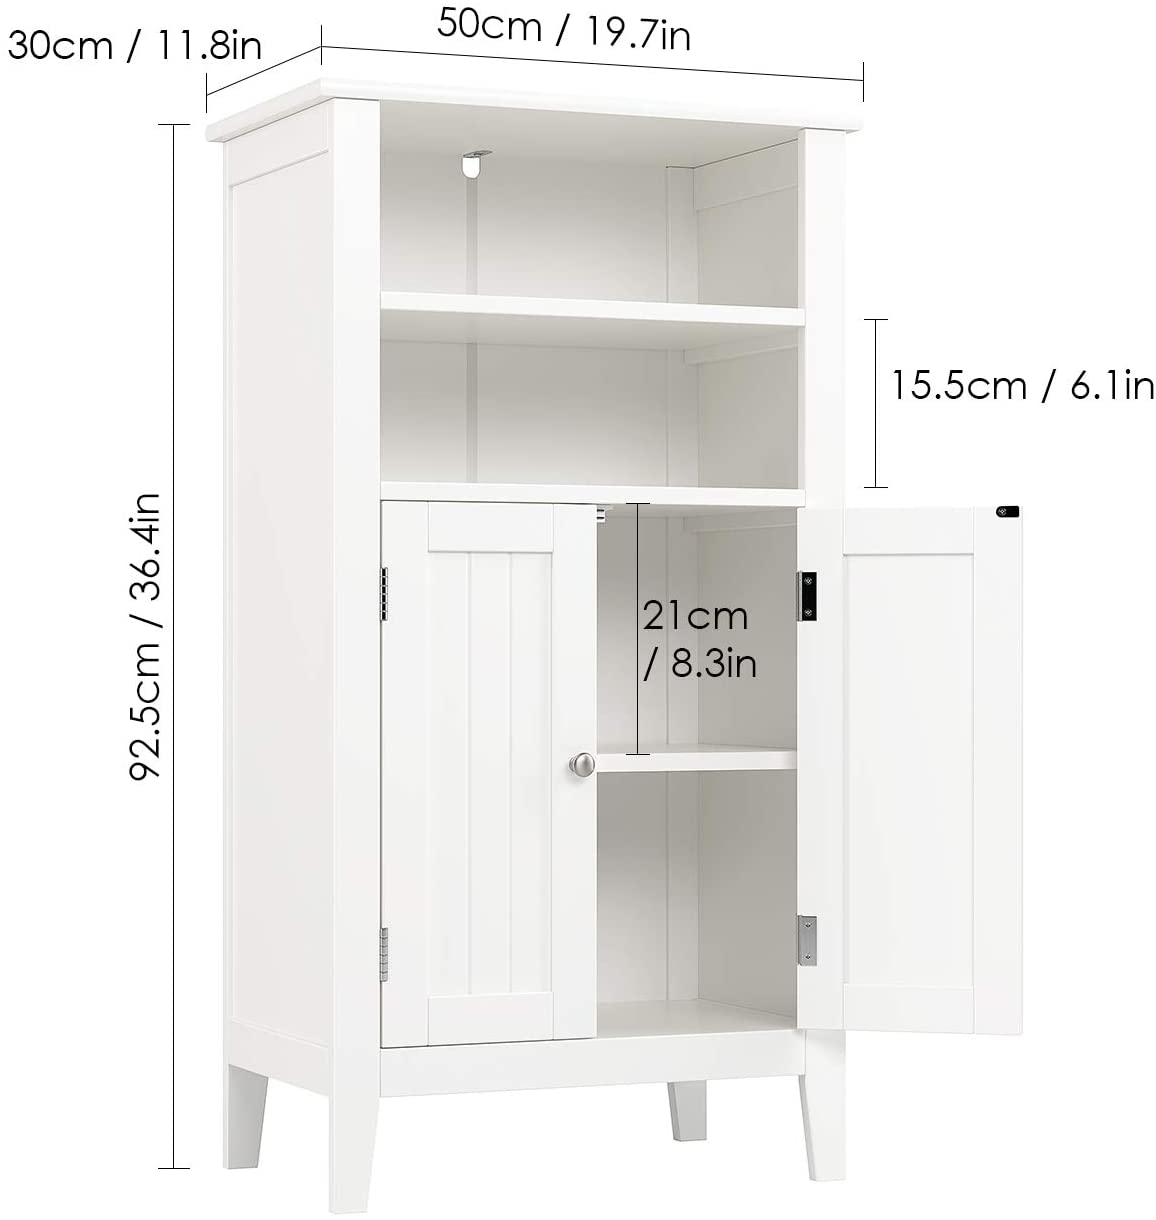 Homfa 2 Tier Shelves Bathroom Storage Cabinet, Wood Storage Floor Cabinet with 2 Doors, White - image 4 of 12